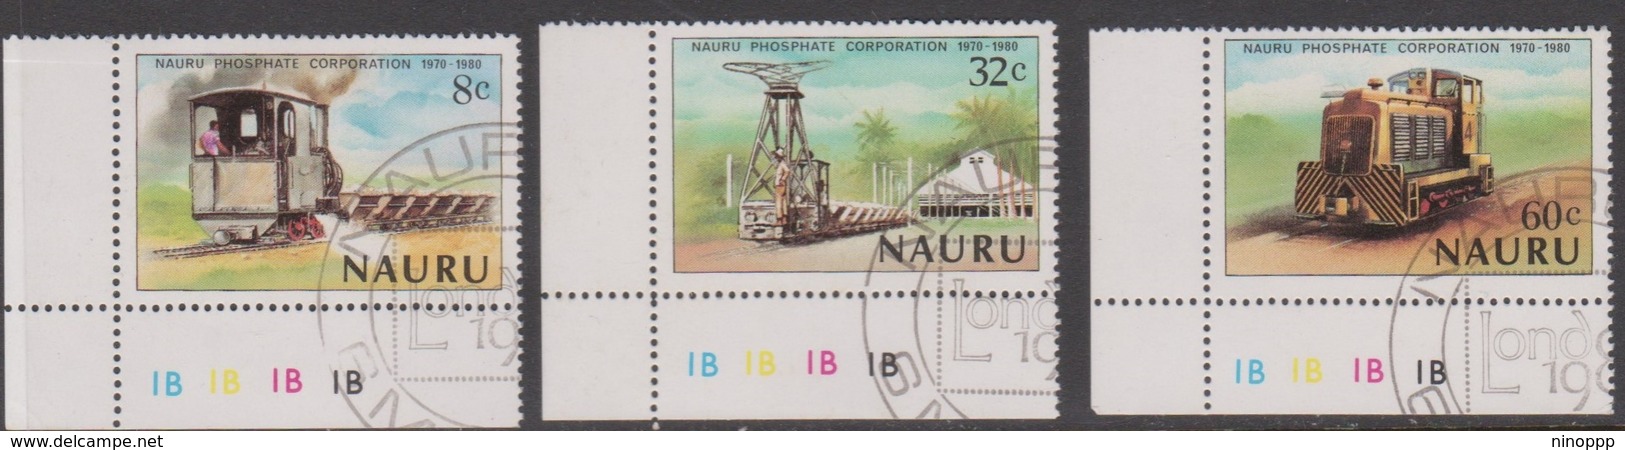 Nauru SG 224-226 1980 Posphate Corporation Railway Train, Used - Nauru